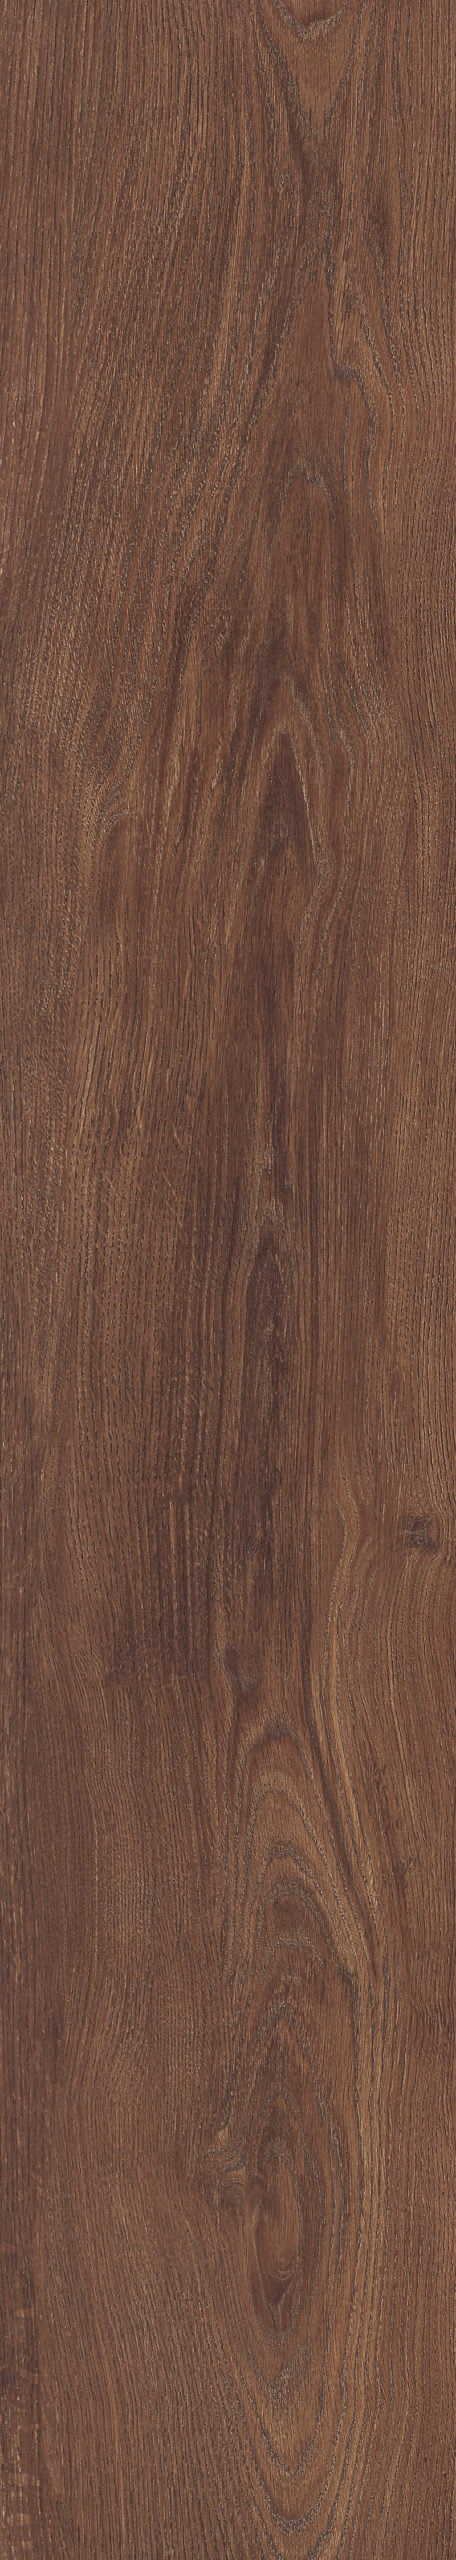 Authentic Oak Scarlet Oak 56288 PVC vloer mFLOR strook